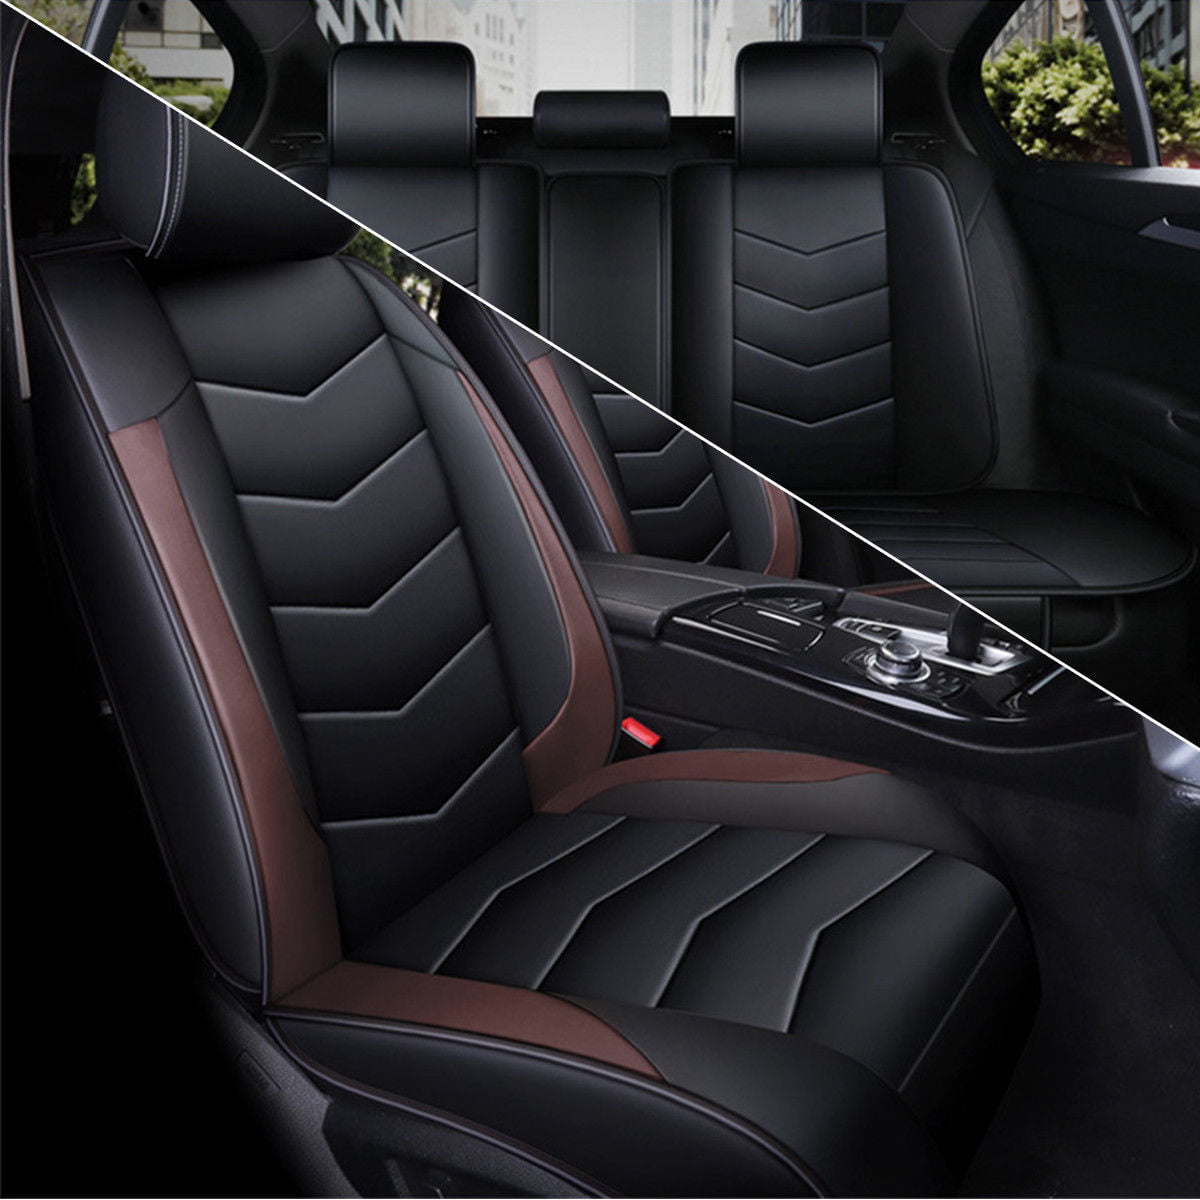 Car Seat Cover Auto PU Leather 5 Seat W/Headest Cushions Protectors